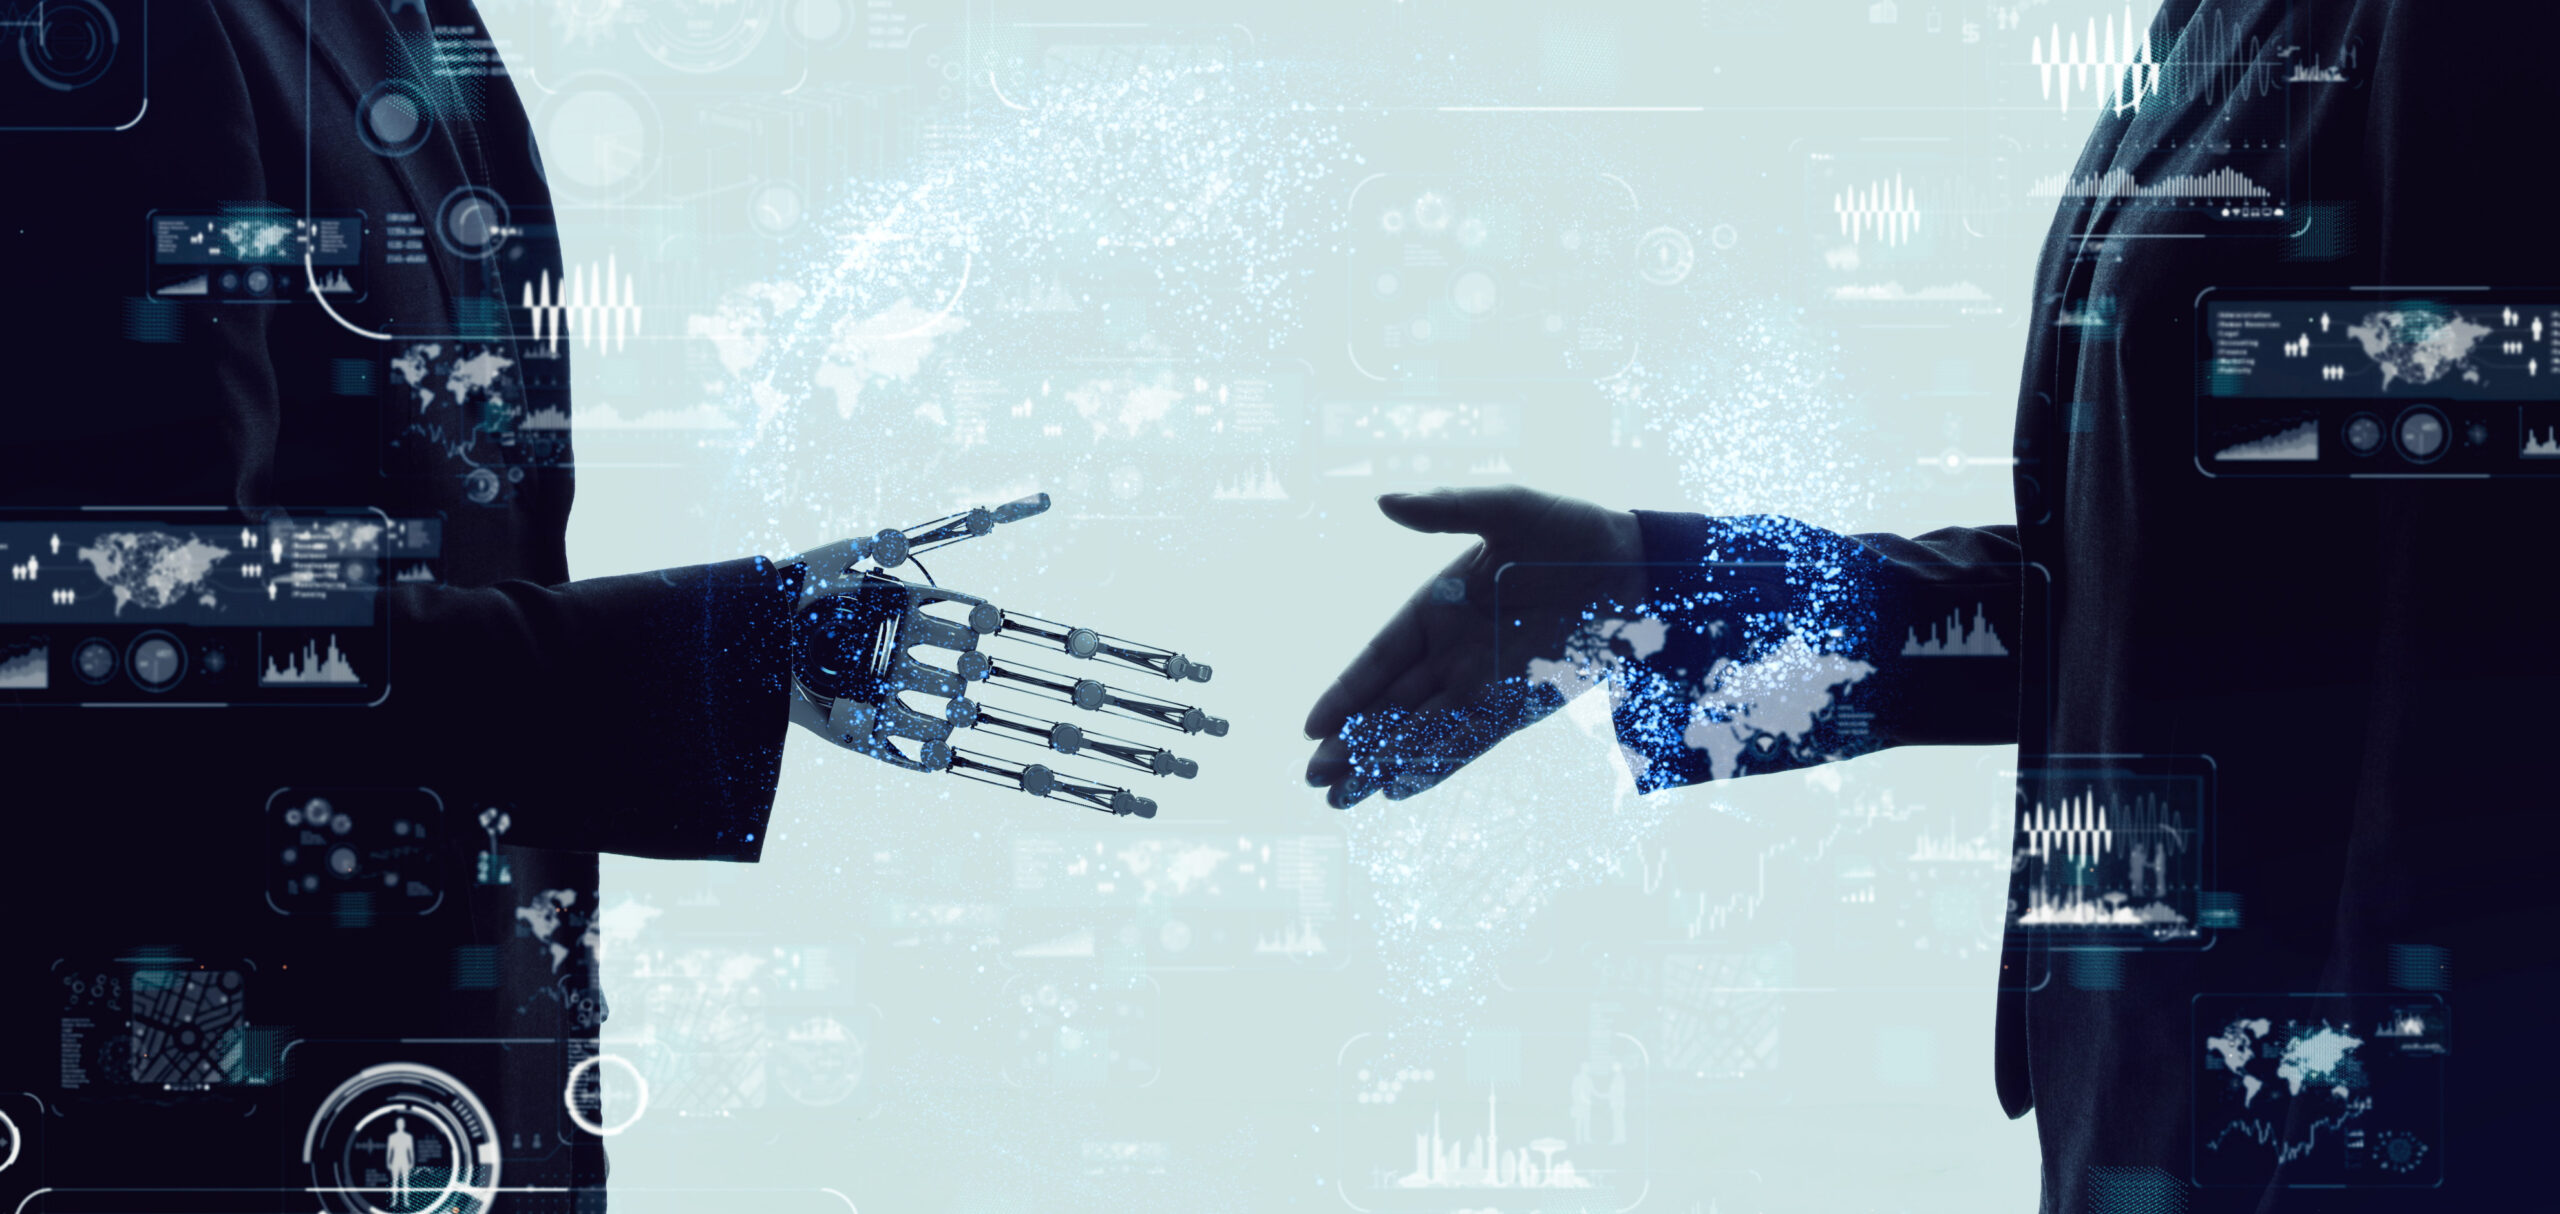 Robot ou intelligence artificielle serrant la main a un humain